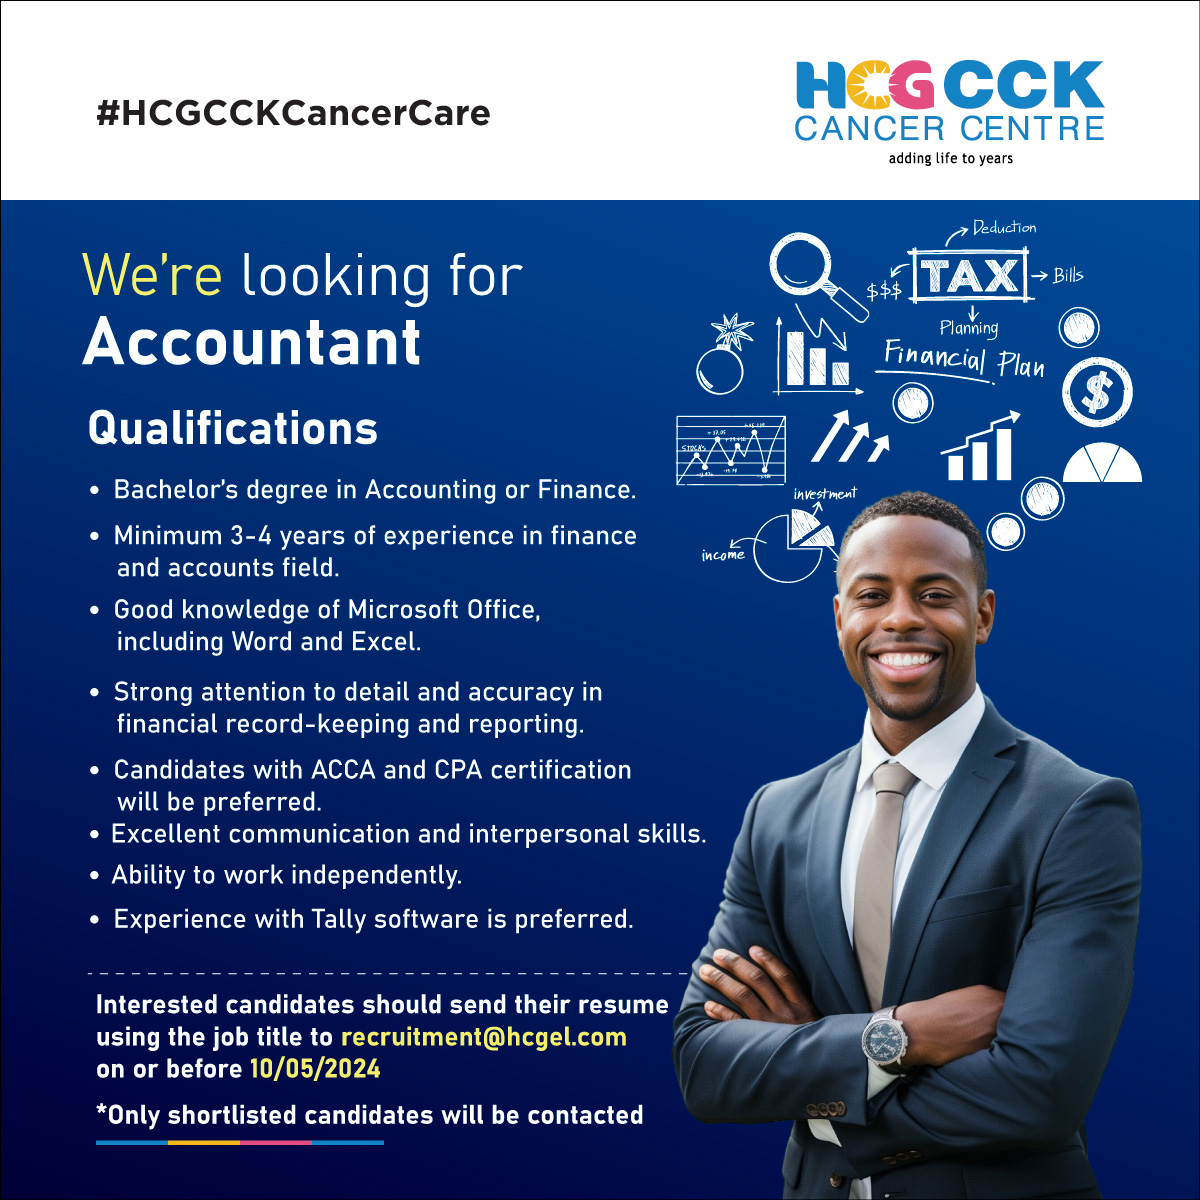 ACCOUNTANT HCG CCK Cancer Centre